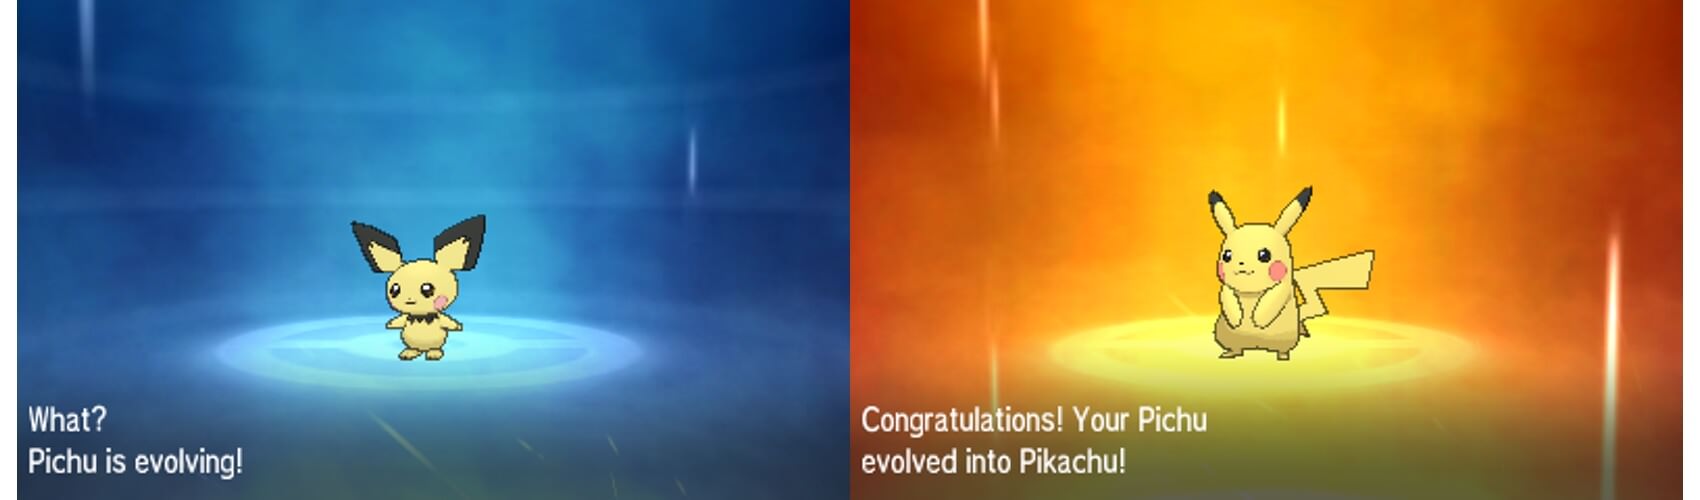 picho-evolve-pikachu-pokemon-sun-moon